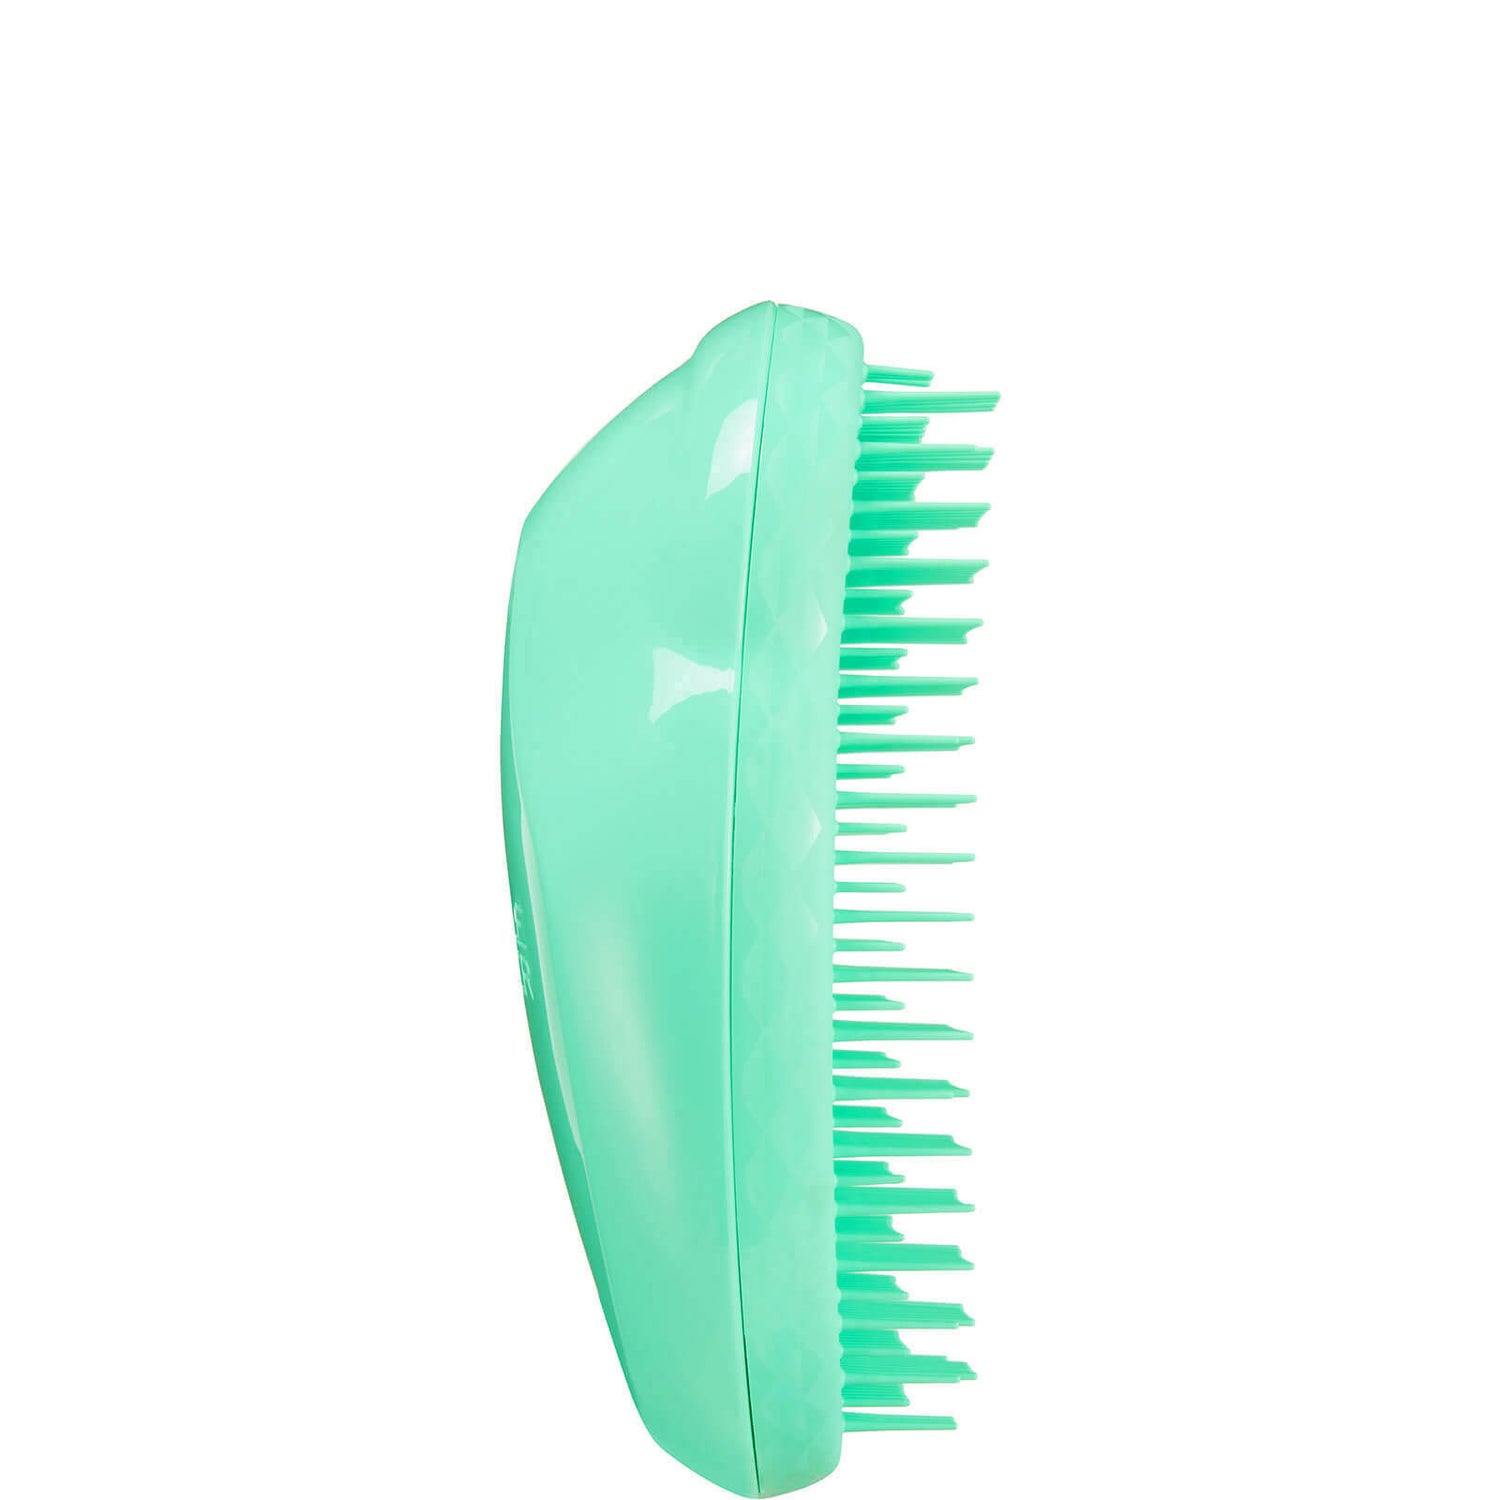 L'originale spazzola antinodi per capelli Tangle Teezer- verde tropicale